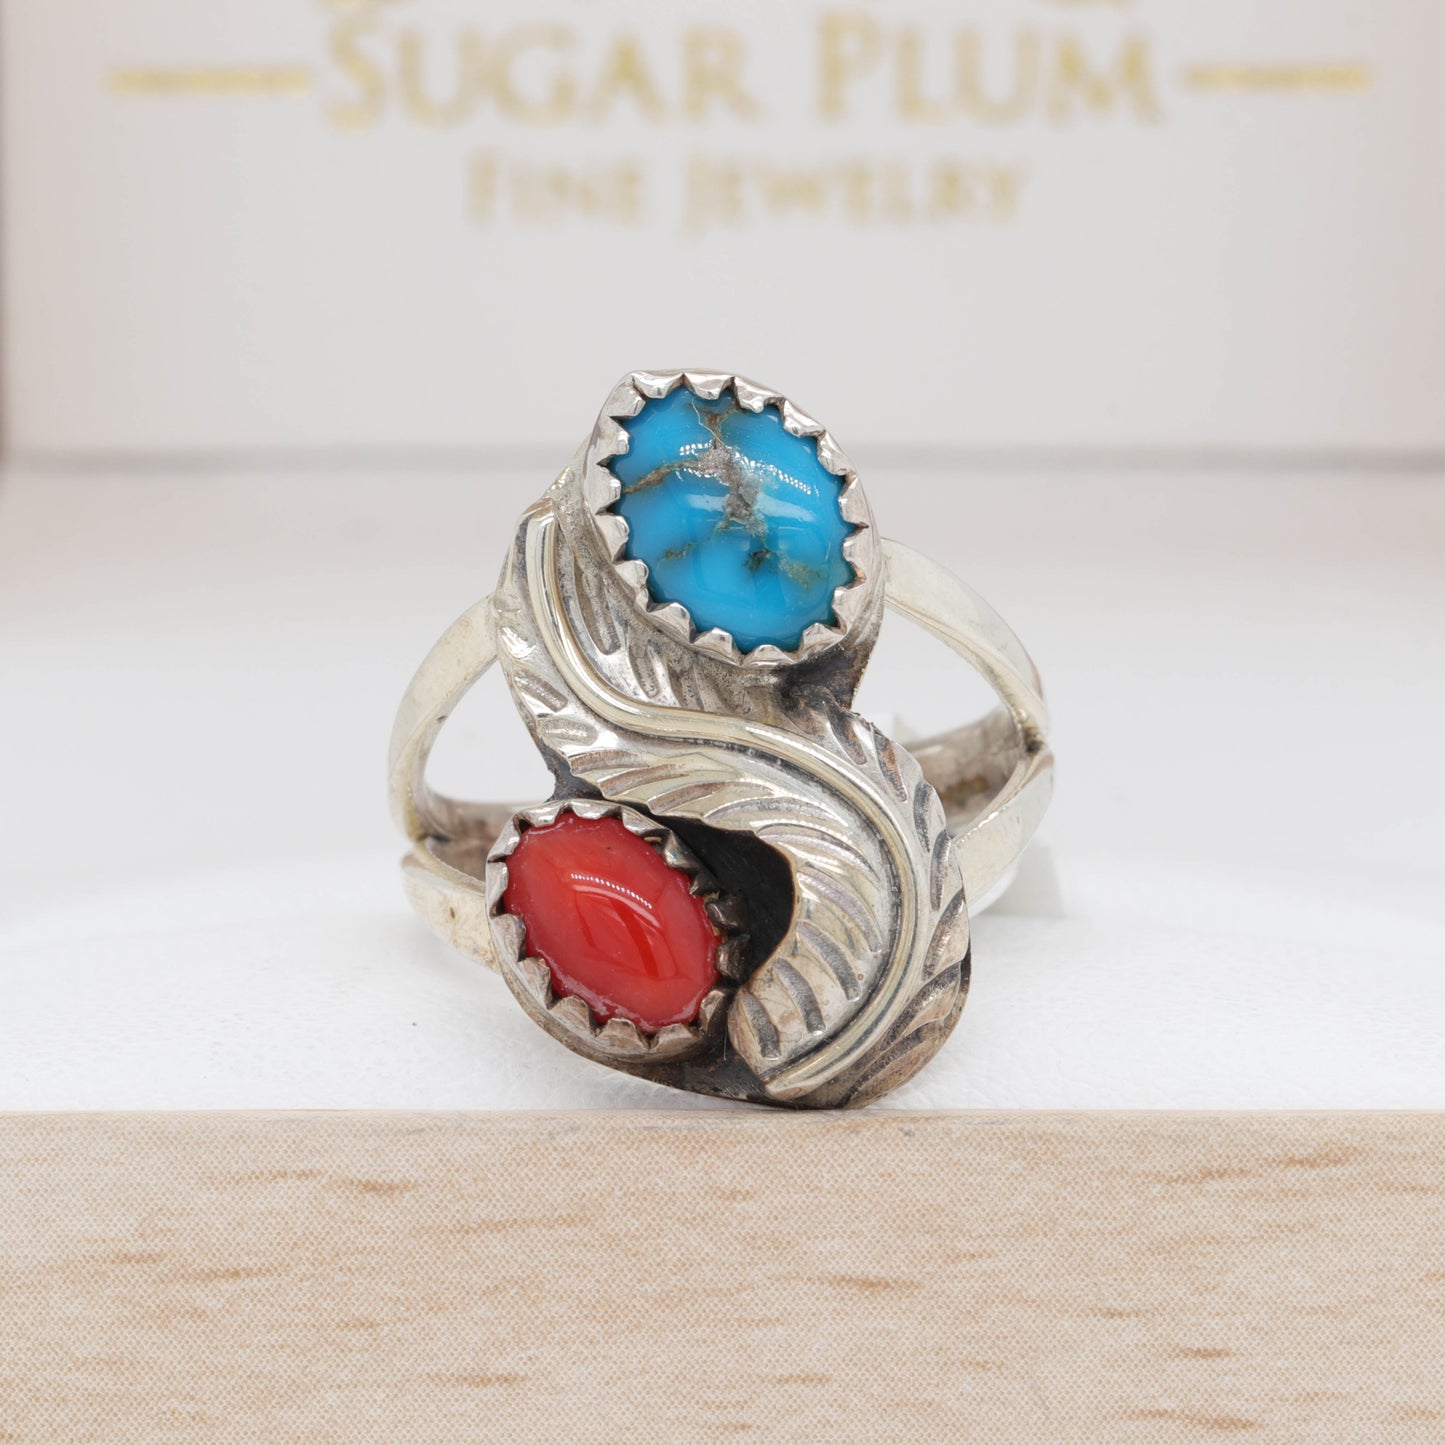 Morenci Turquoise Ring - Size 5.25